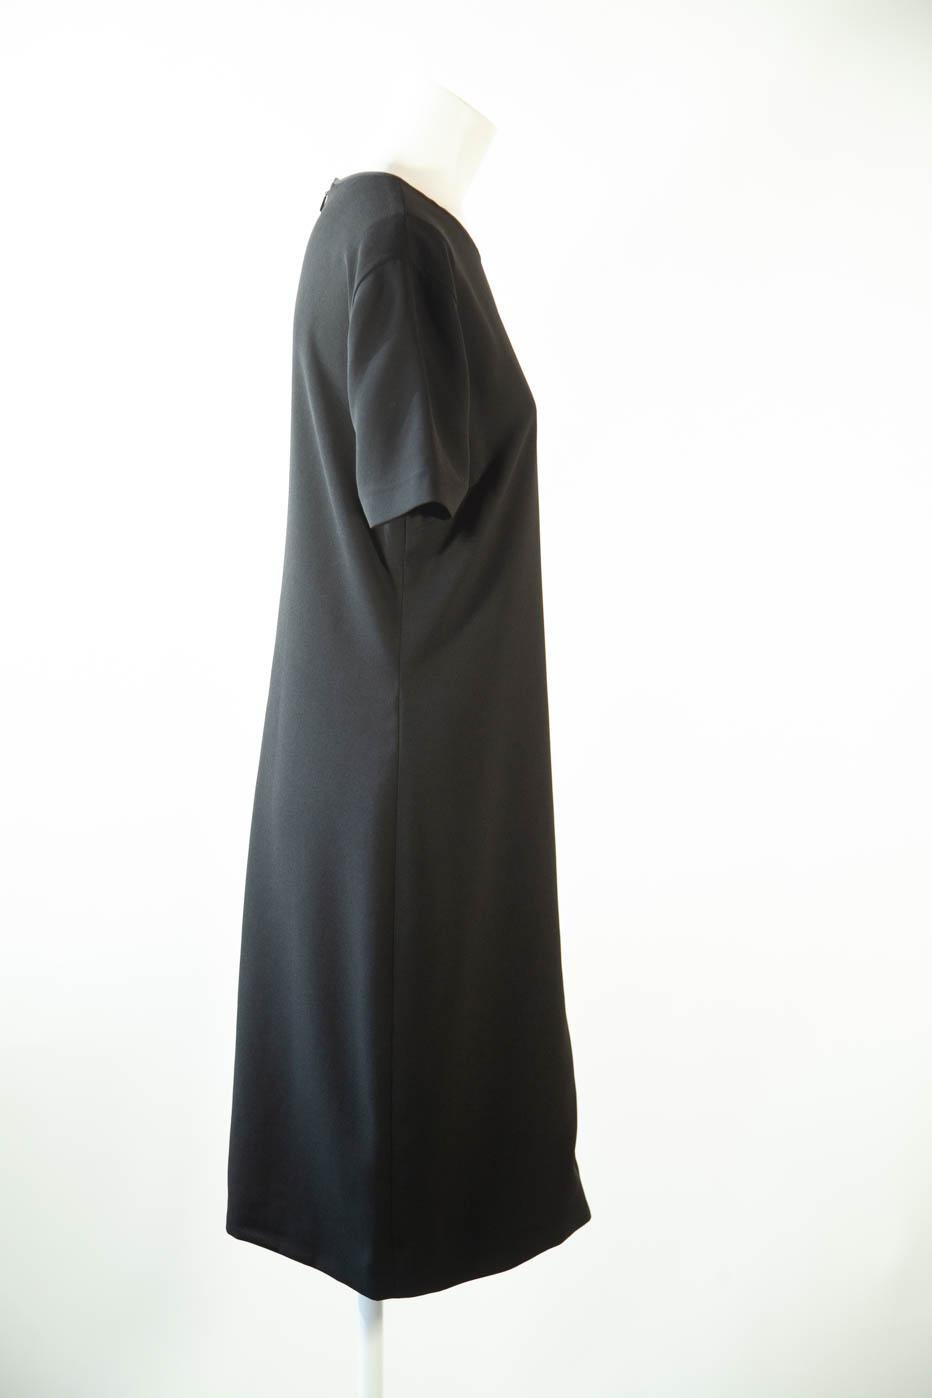 Women's Fendi black and navy color block dress